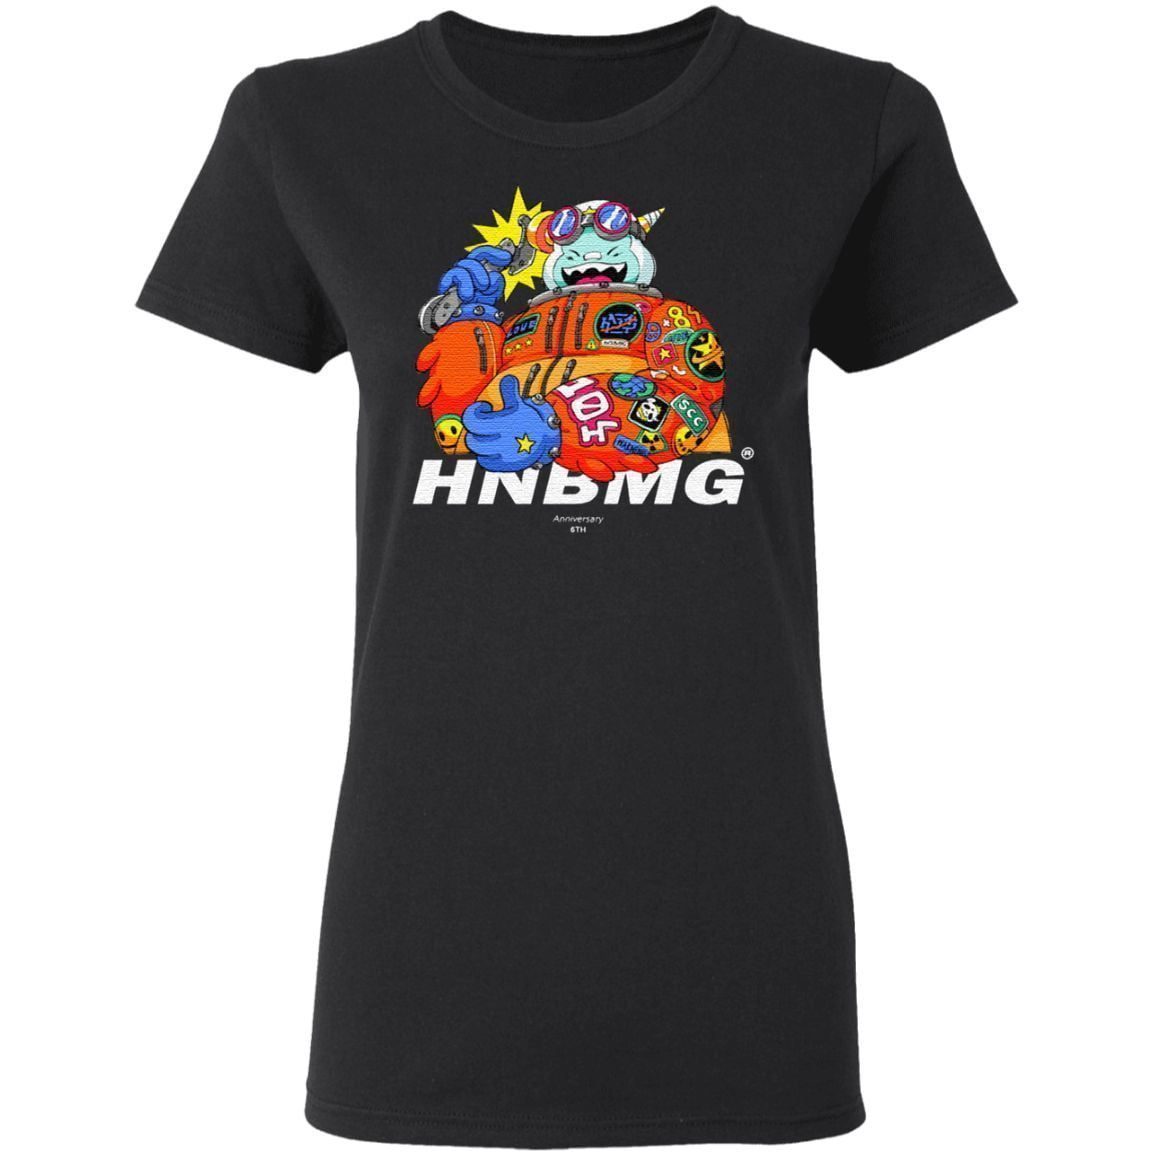 hnbmg t shirt